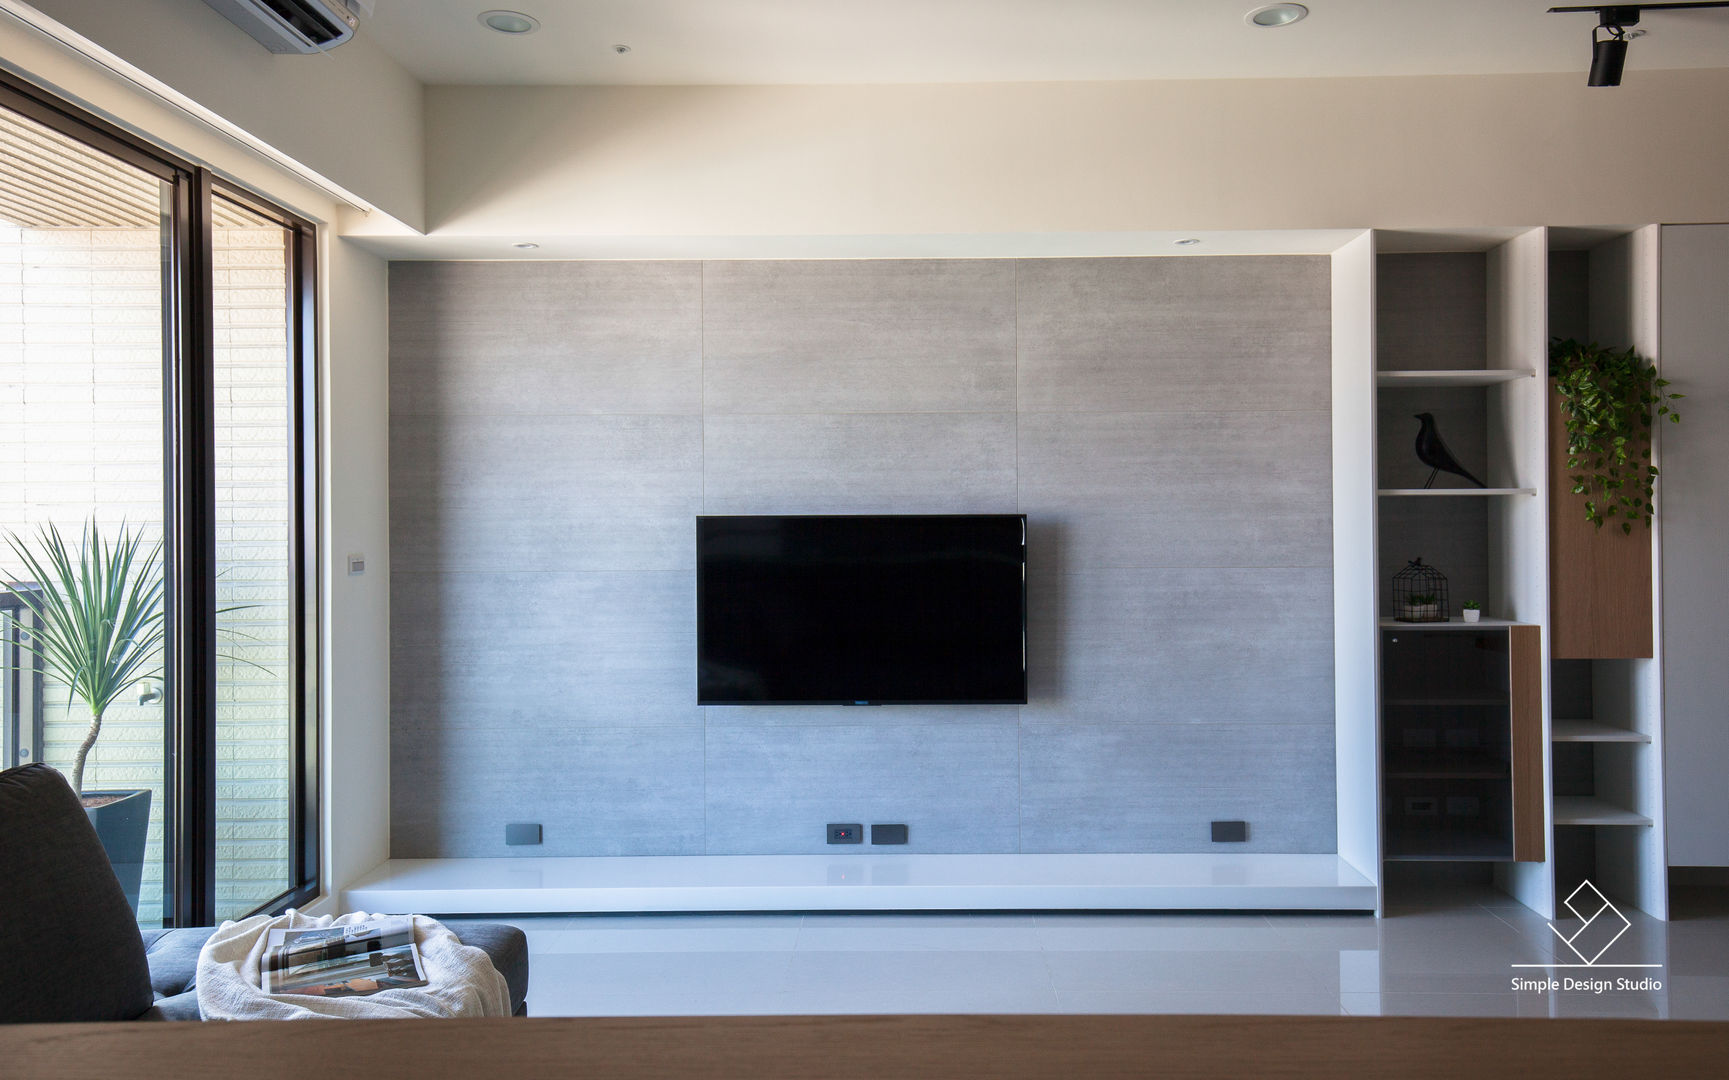 客廳 極簡室內設計 Simple Design Studio Minimalist living room